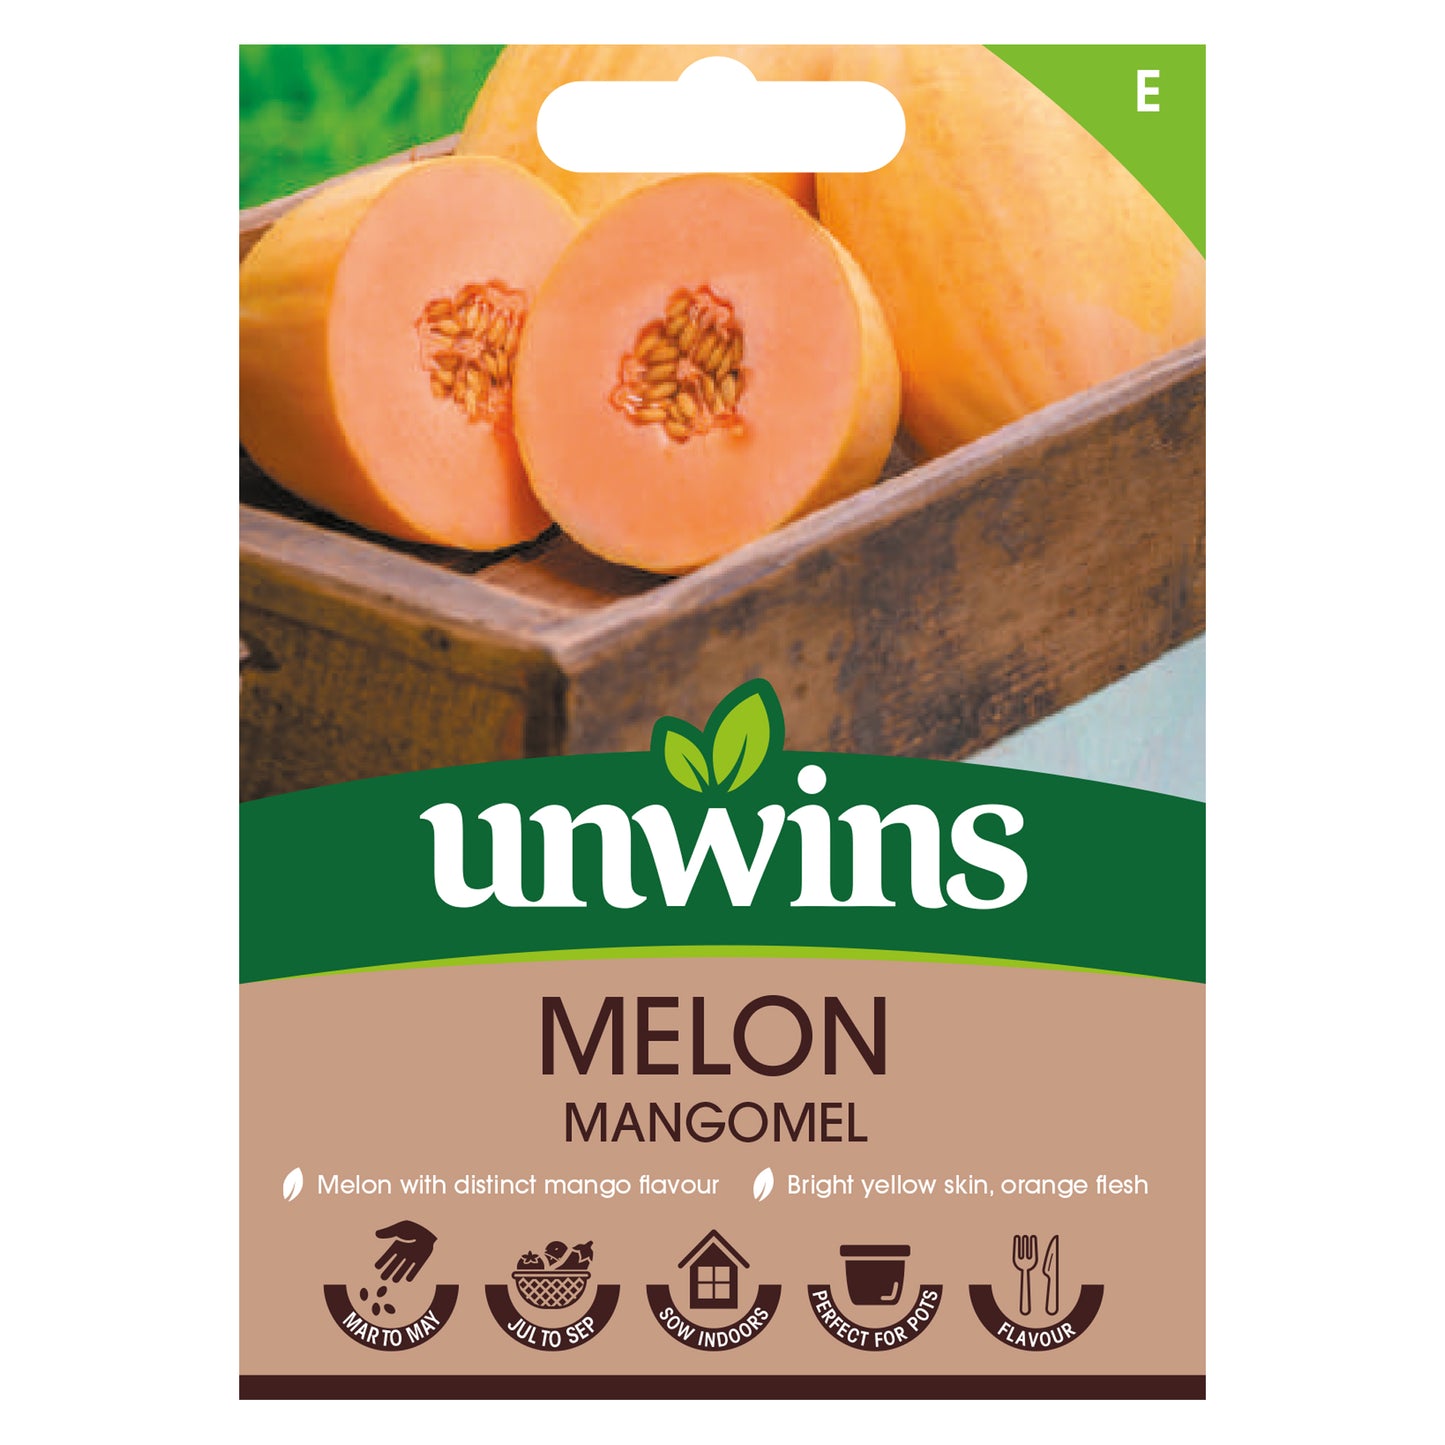 Unwins Melon Mangomel Seeds front of pack